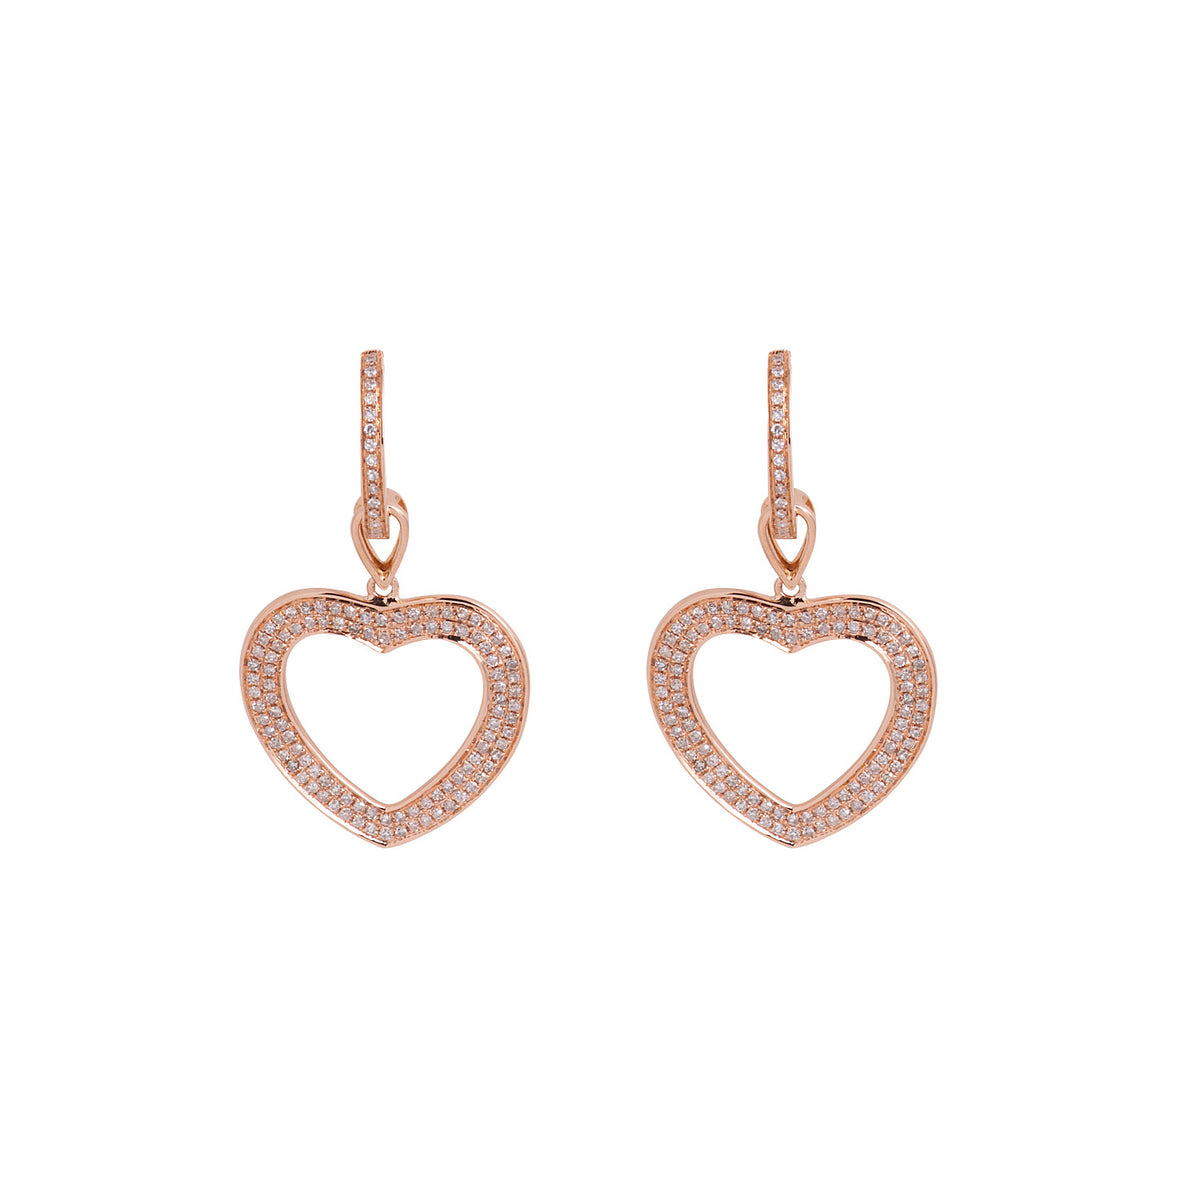 Diamond heart earrings. Rose gold earrings. Σκουλαρίκια καρδιές με διαμάντια.